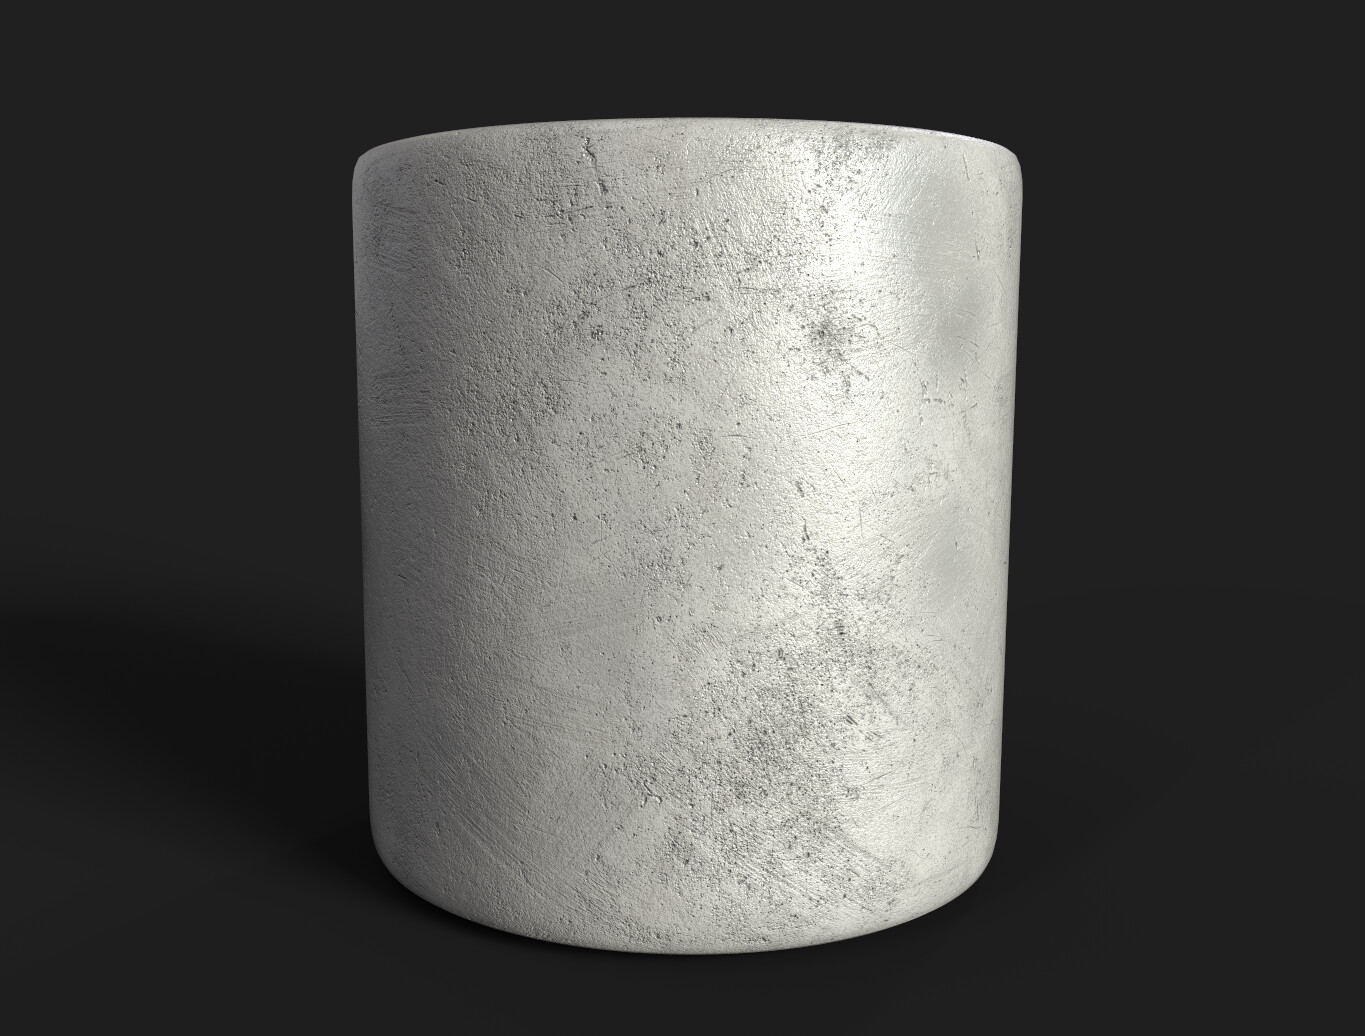 ArtStation - Cement material